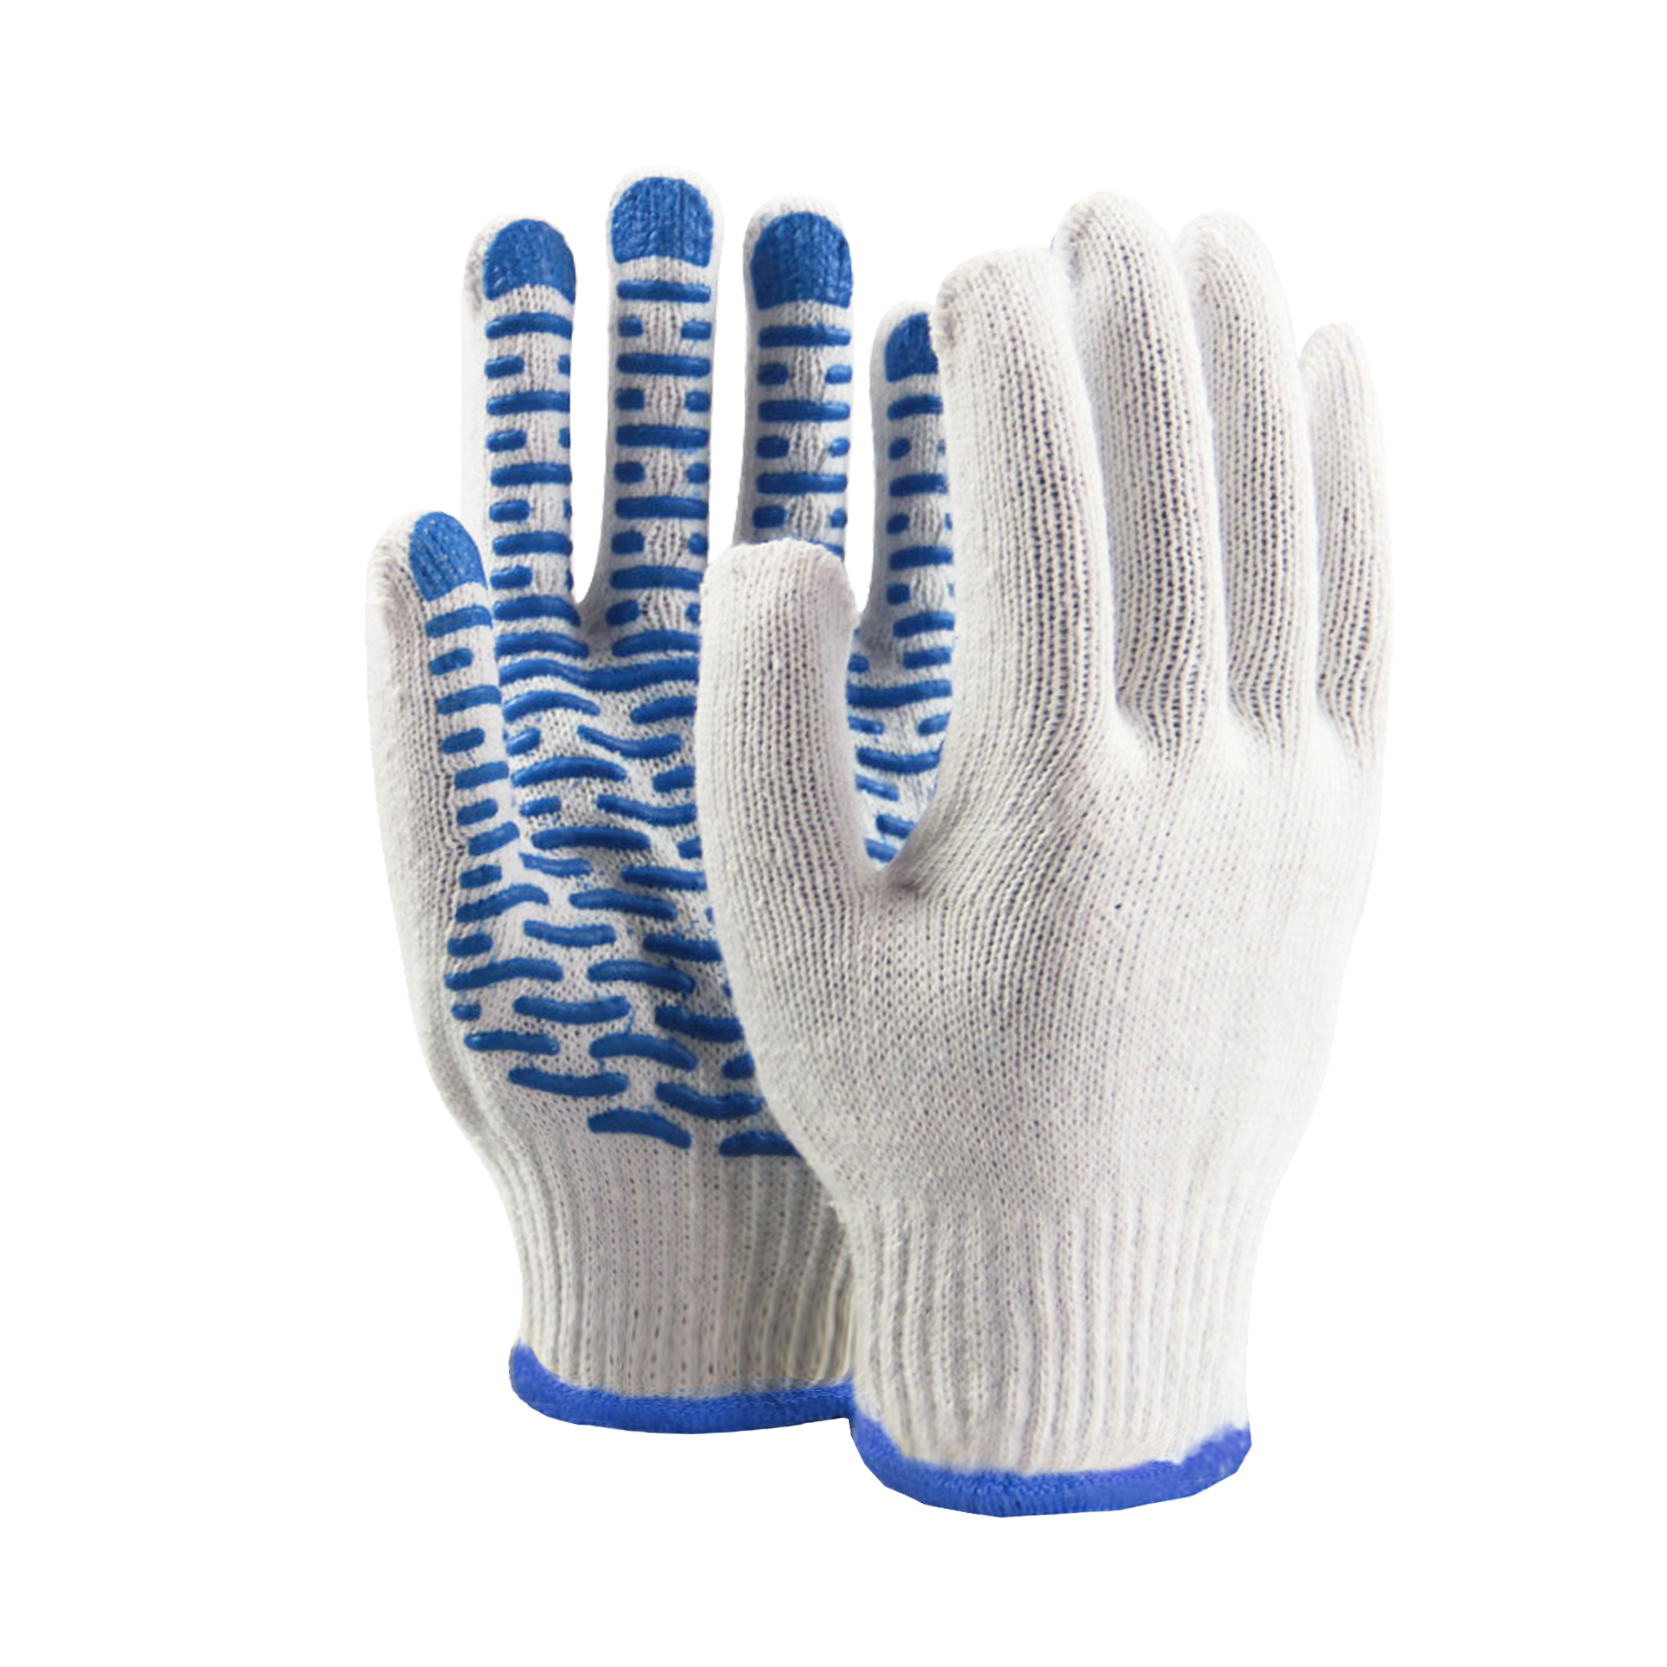 Pvc Dotted Natural White Cotton Glove Cotton Knit Glove